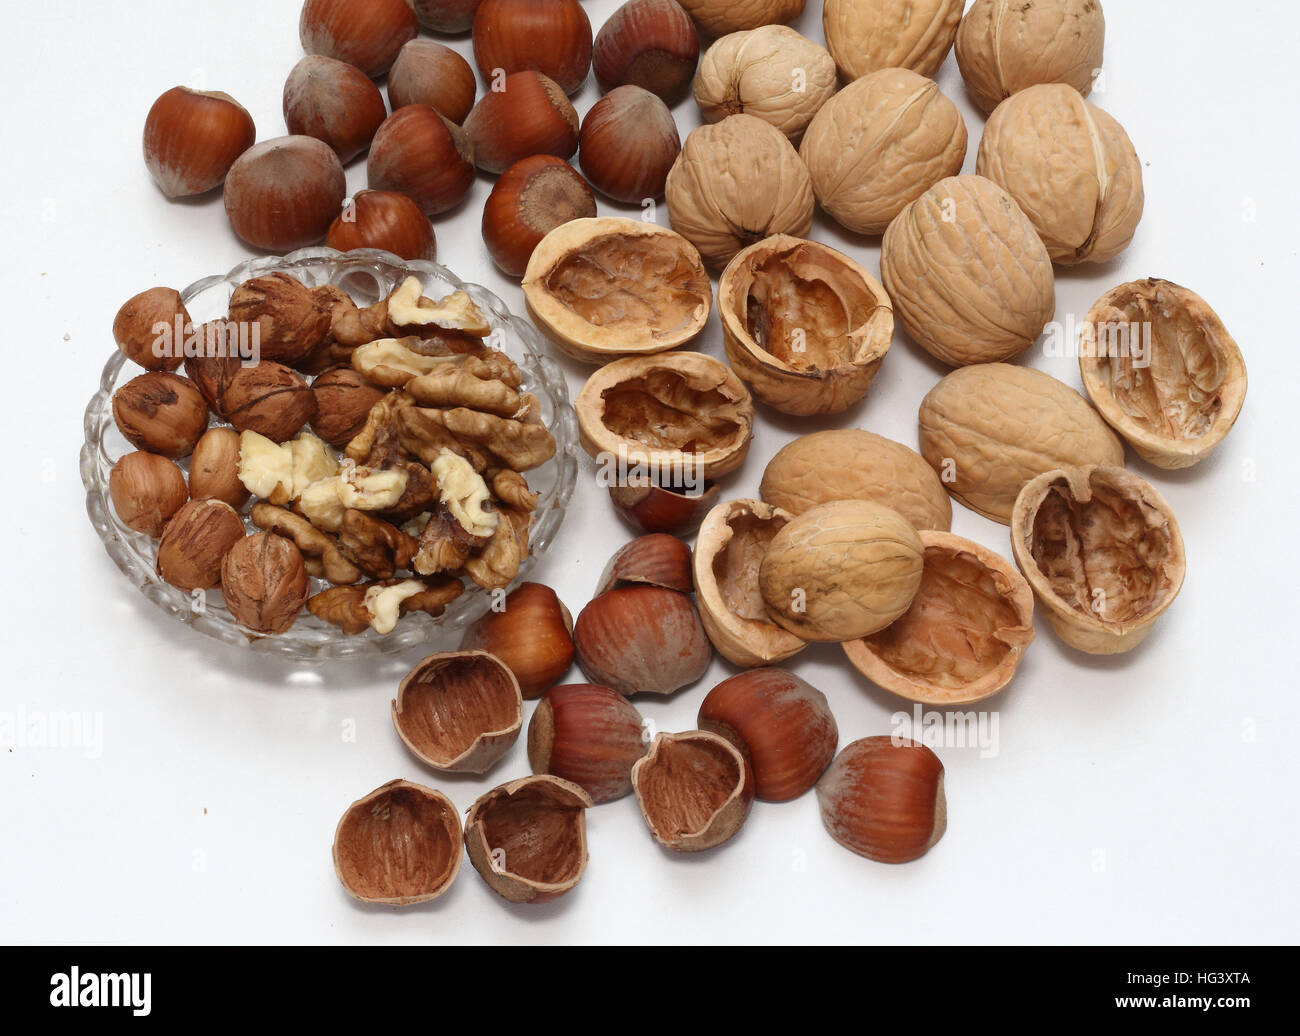 Hazelnuts and walnuts Stock Photo